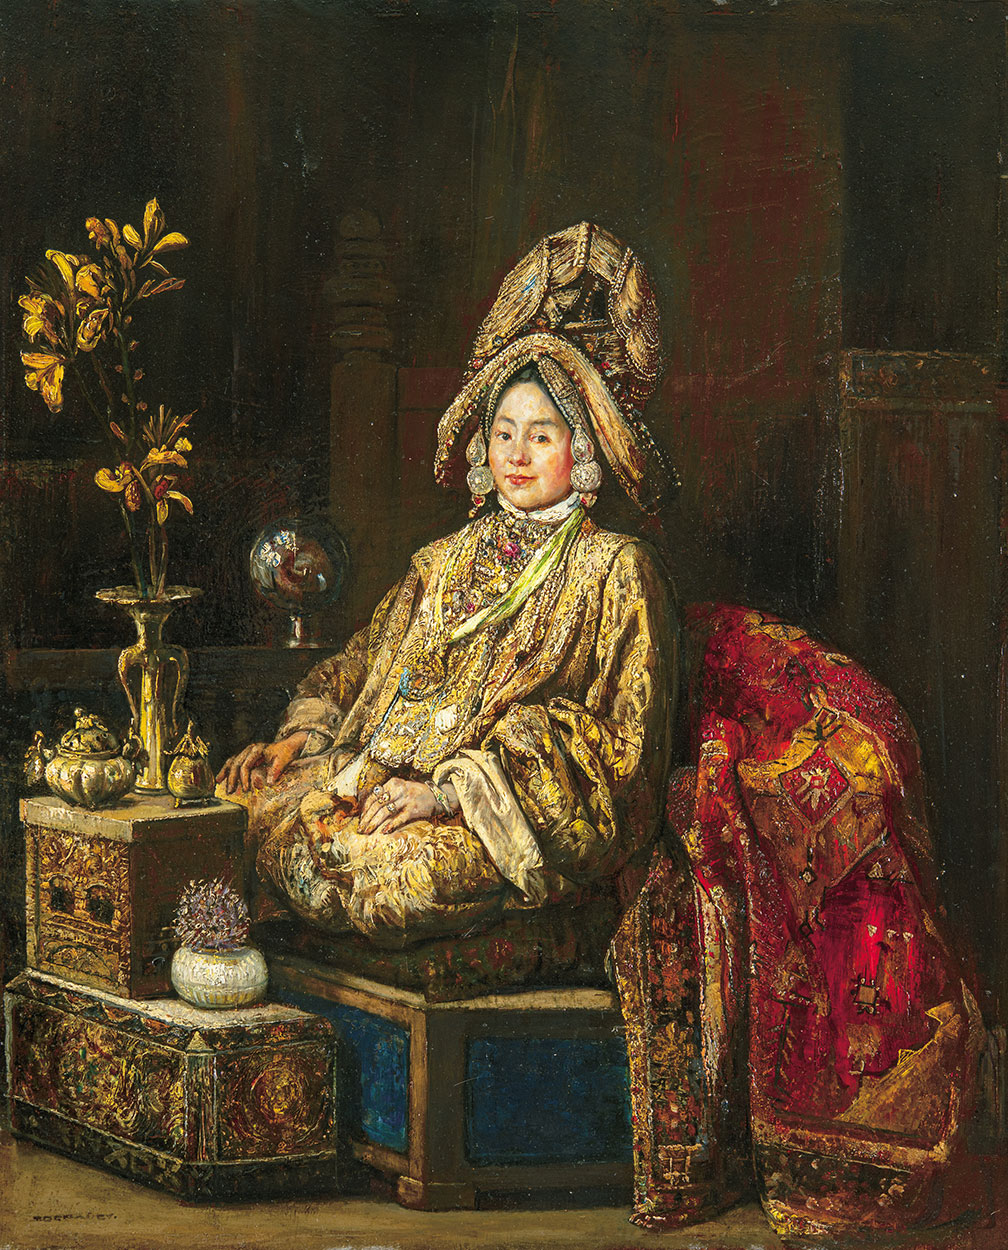 Tornai Gyula, Tibeti nő